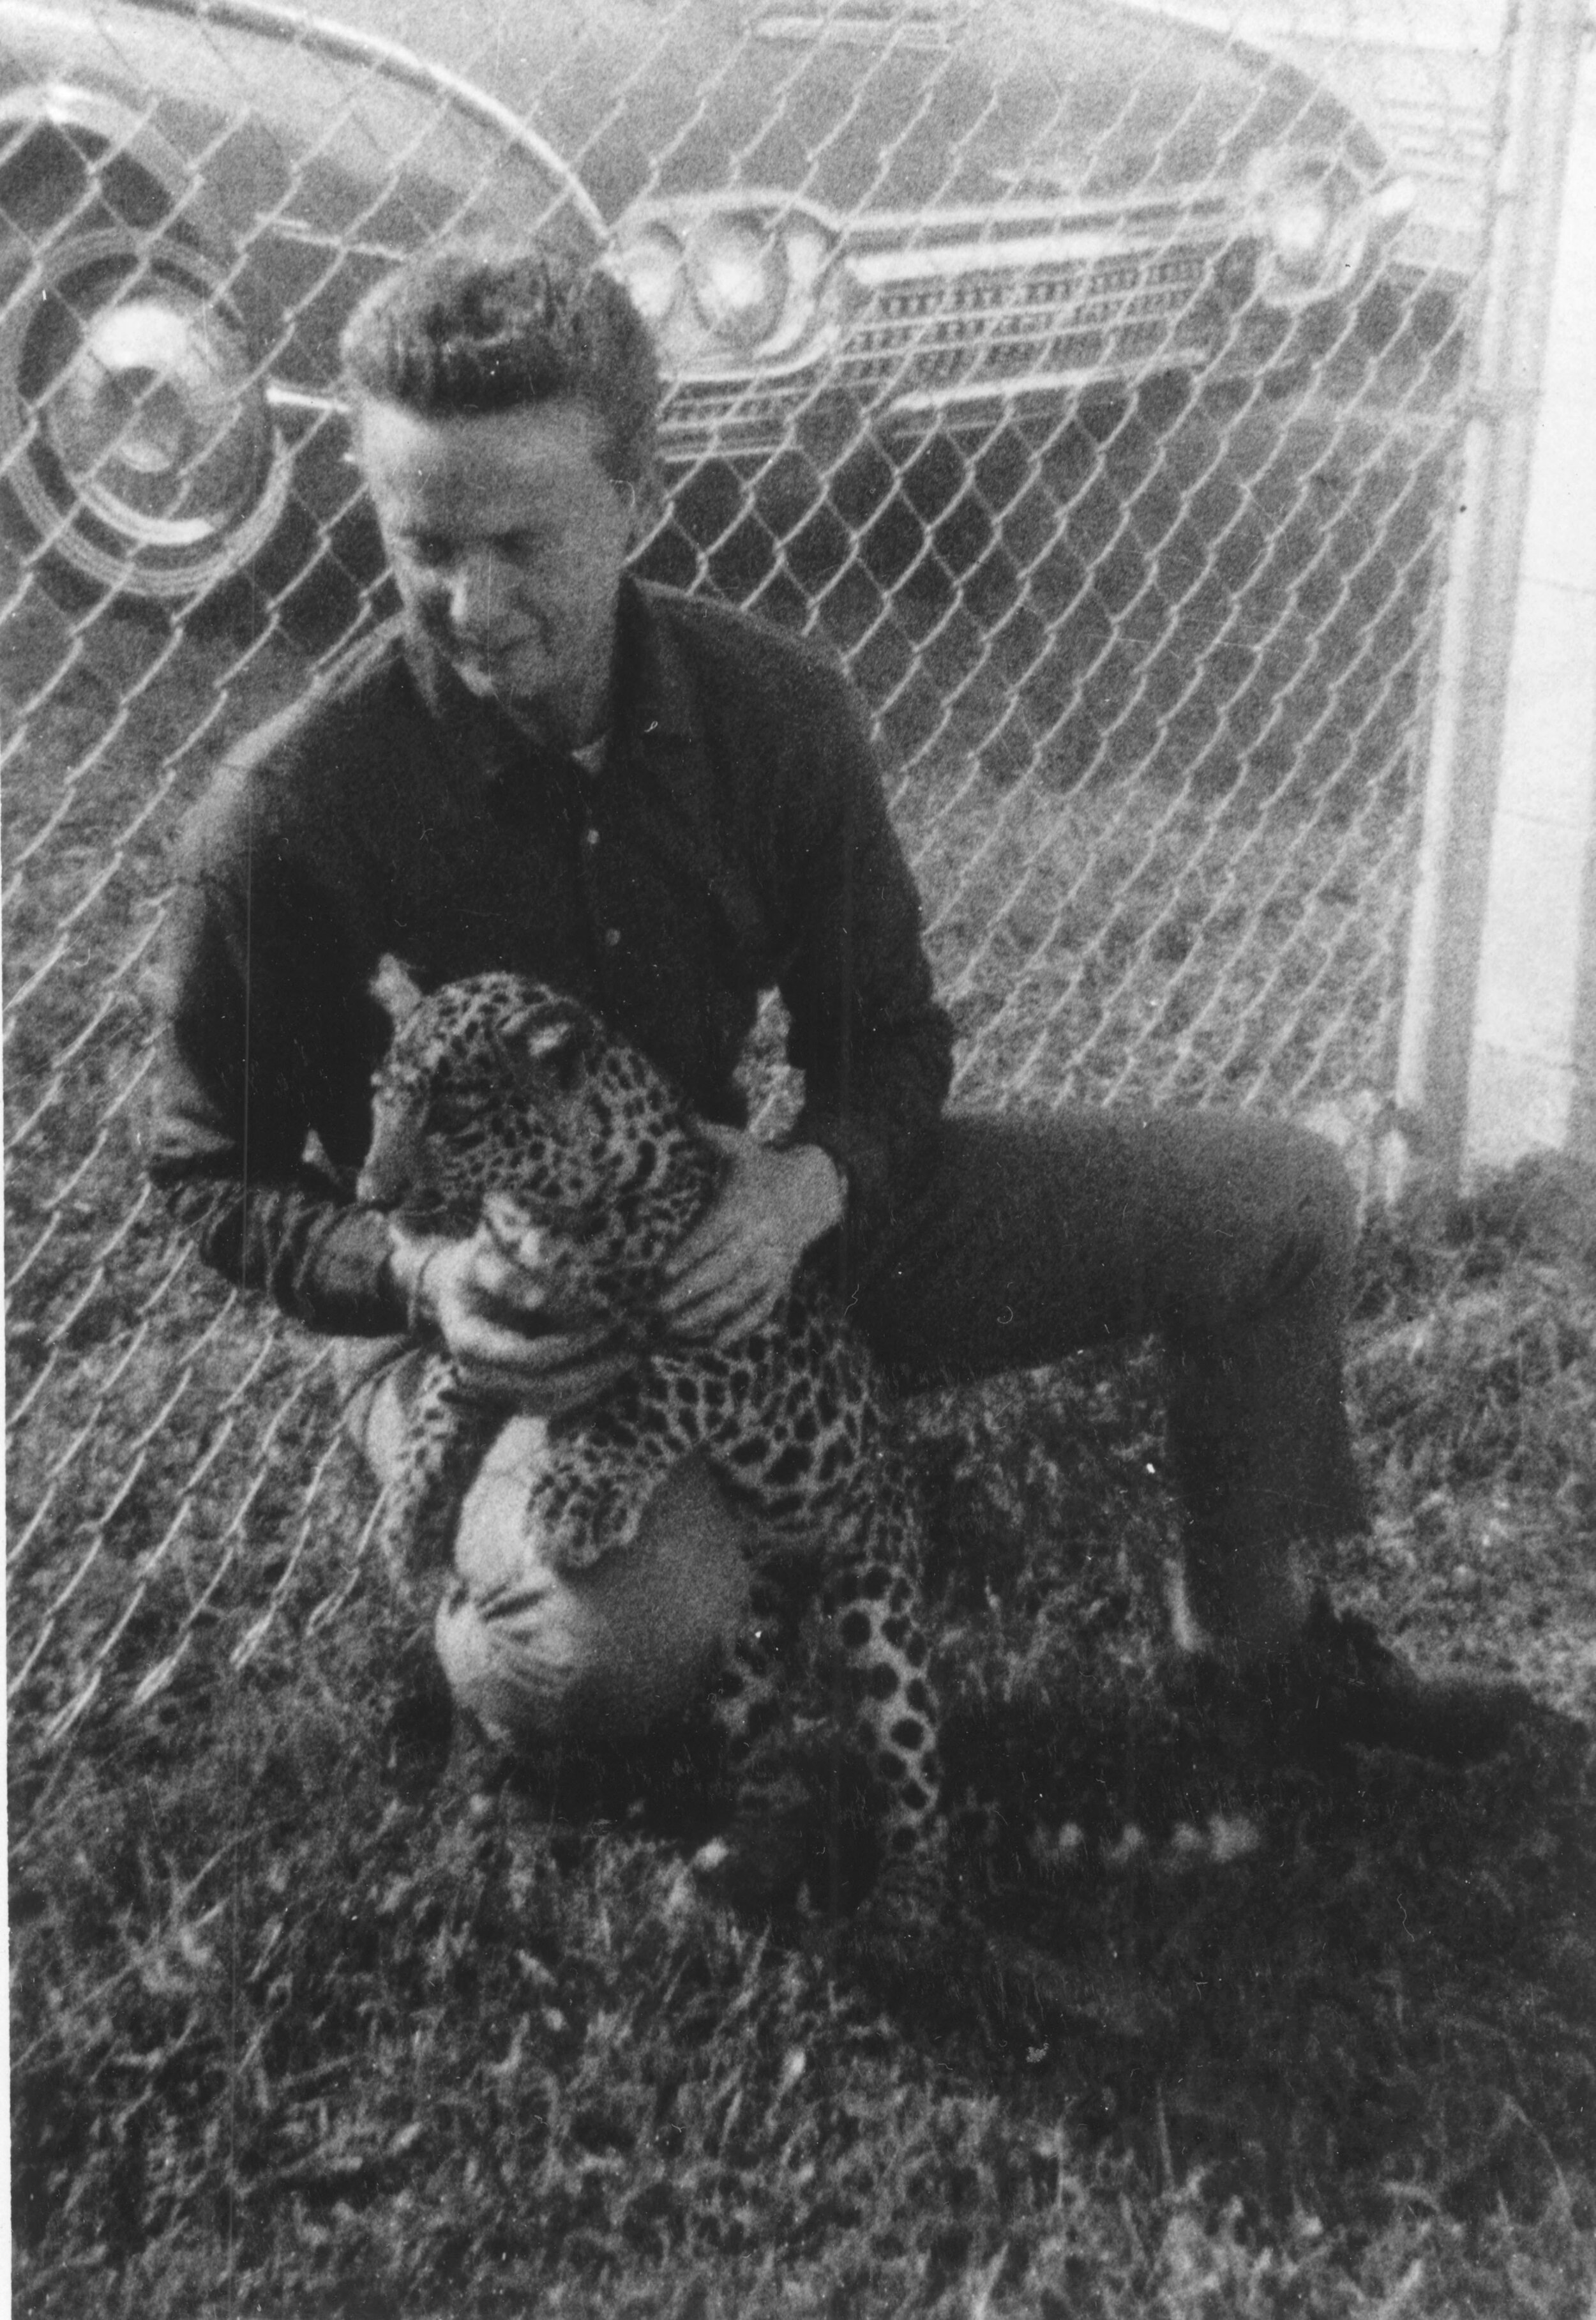  Erickson and pet leopard Henry. 